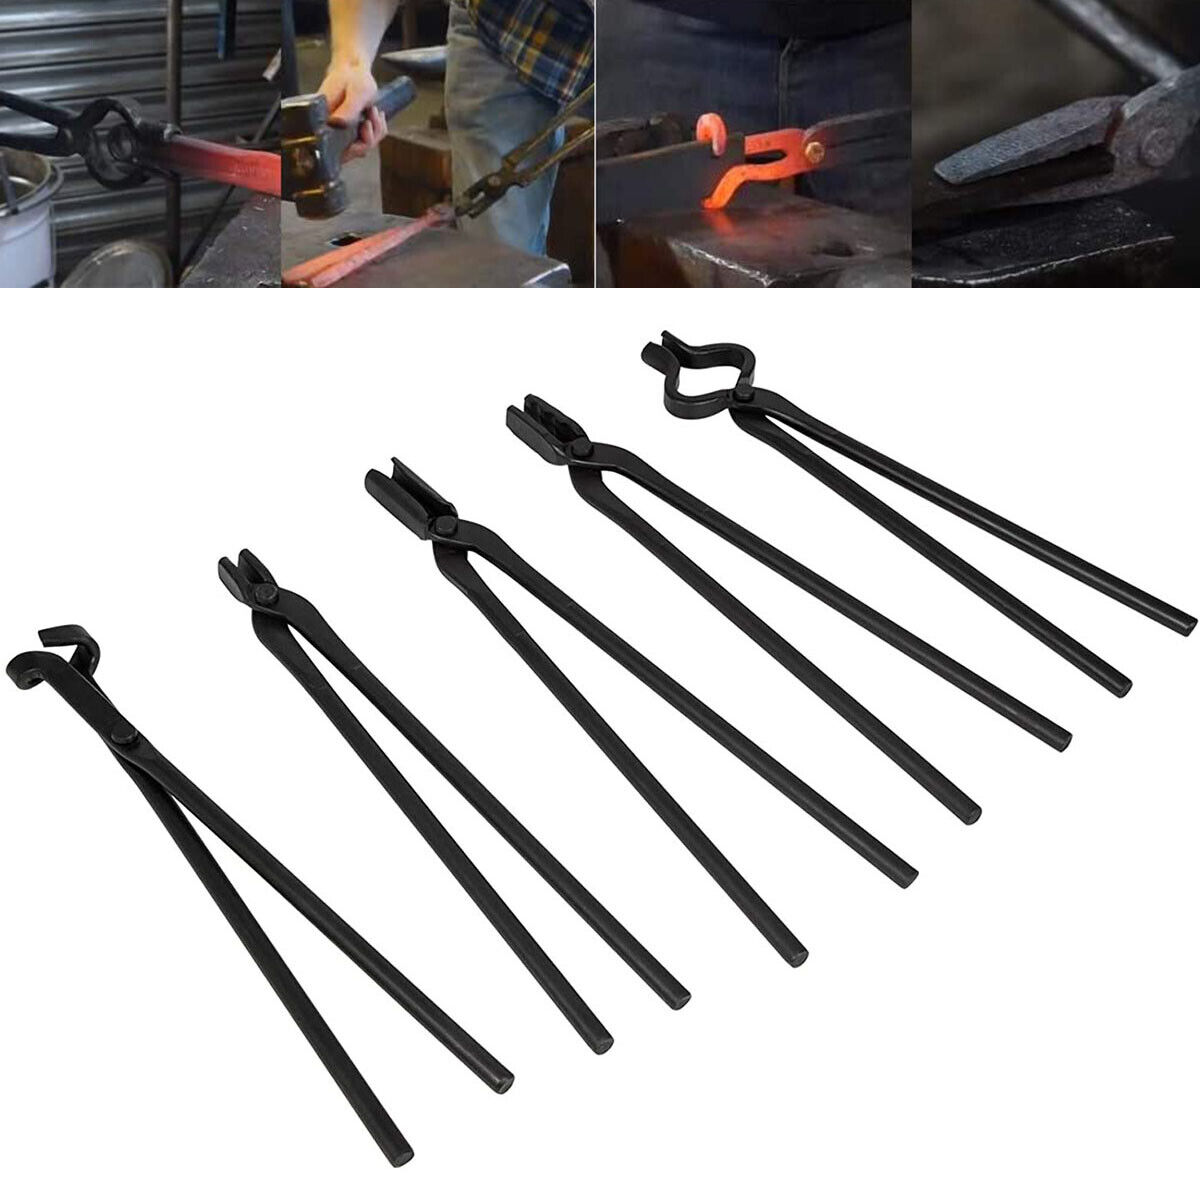 5PC Knife Making Blacksmith Tongs Bladesmith Hand Tool Set Anvil Vise Forge Flat